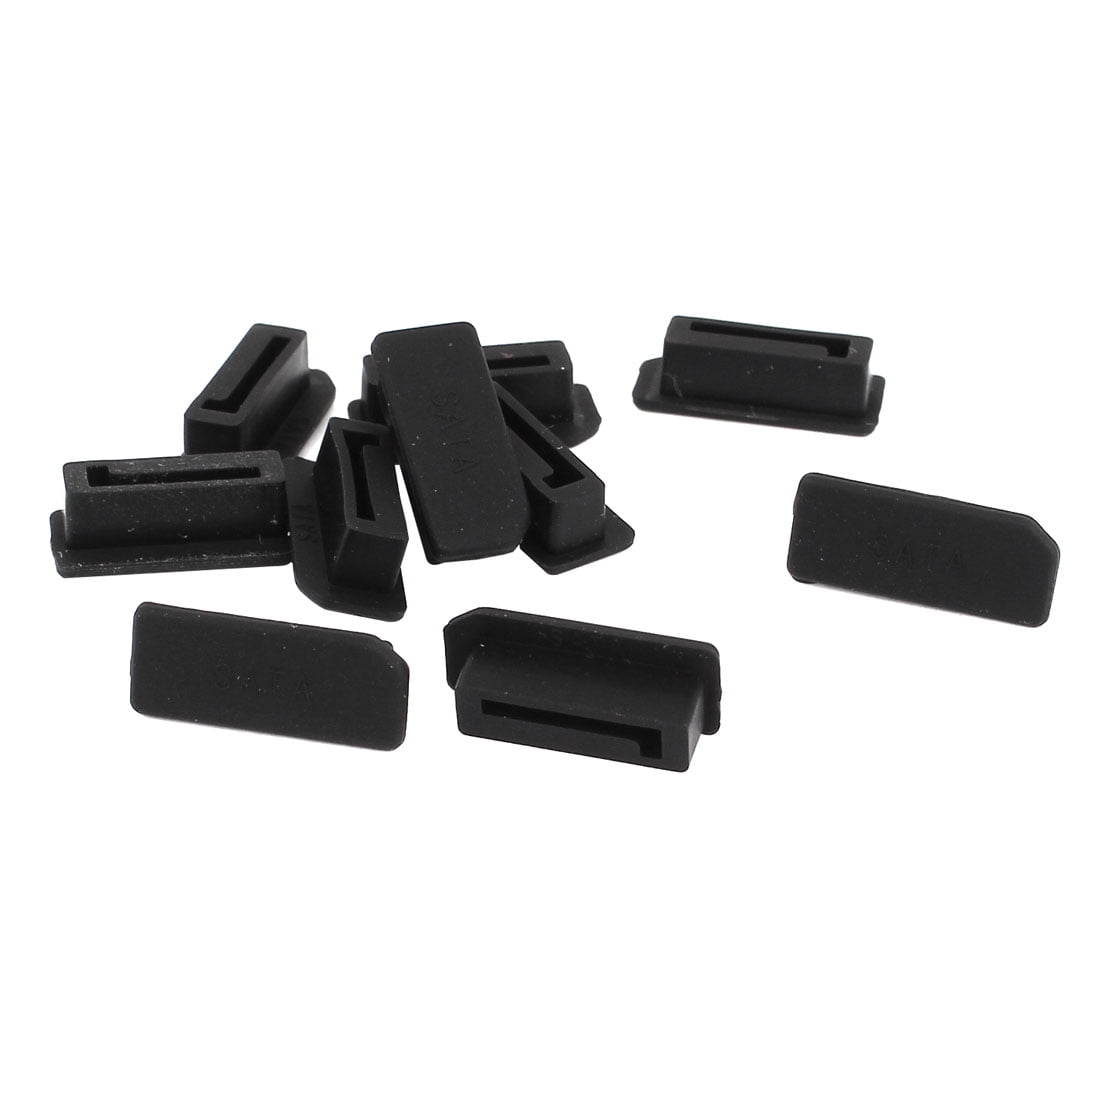 10Pcs Plastic USB male anti-dust plug stopper cap cover protector lidsES 